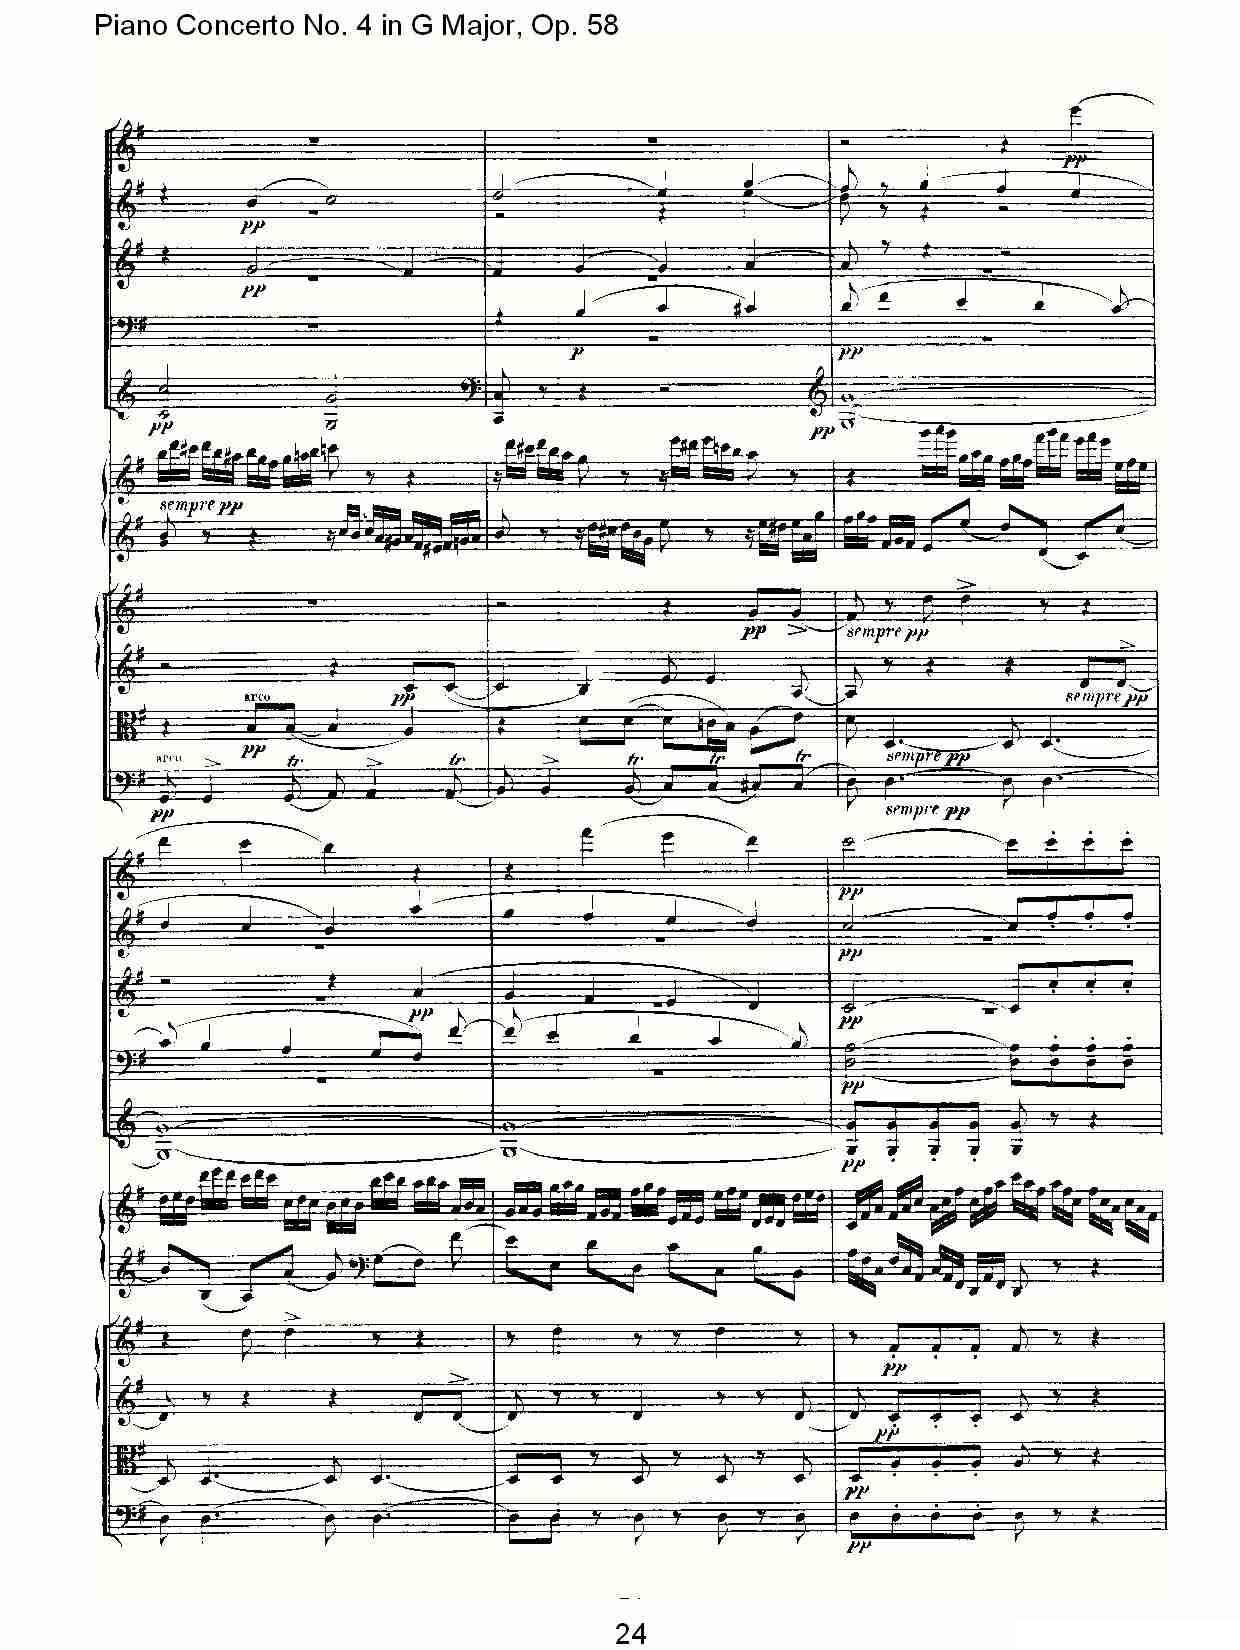 Ｇ大调钢琴第四协奏曲 Op.58 第一乐章钢琴曲谱（图24）